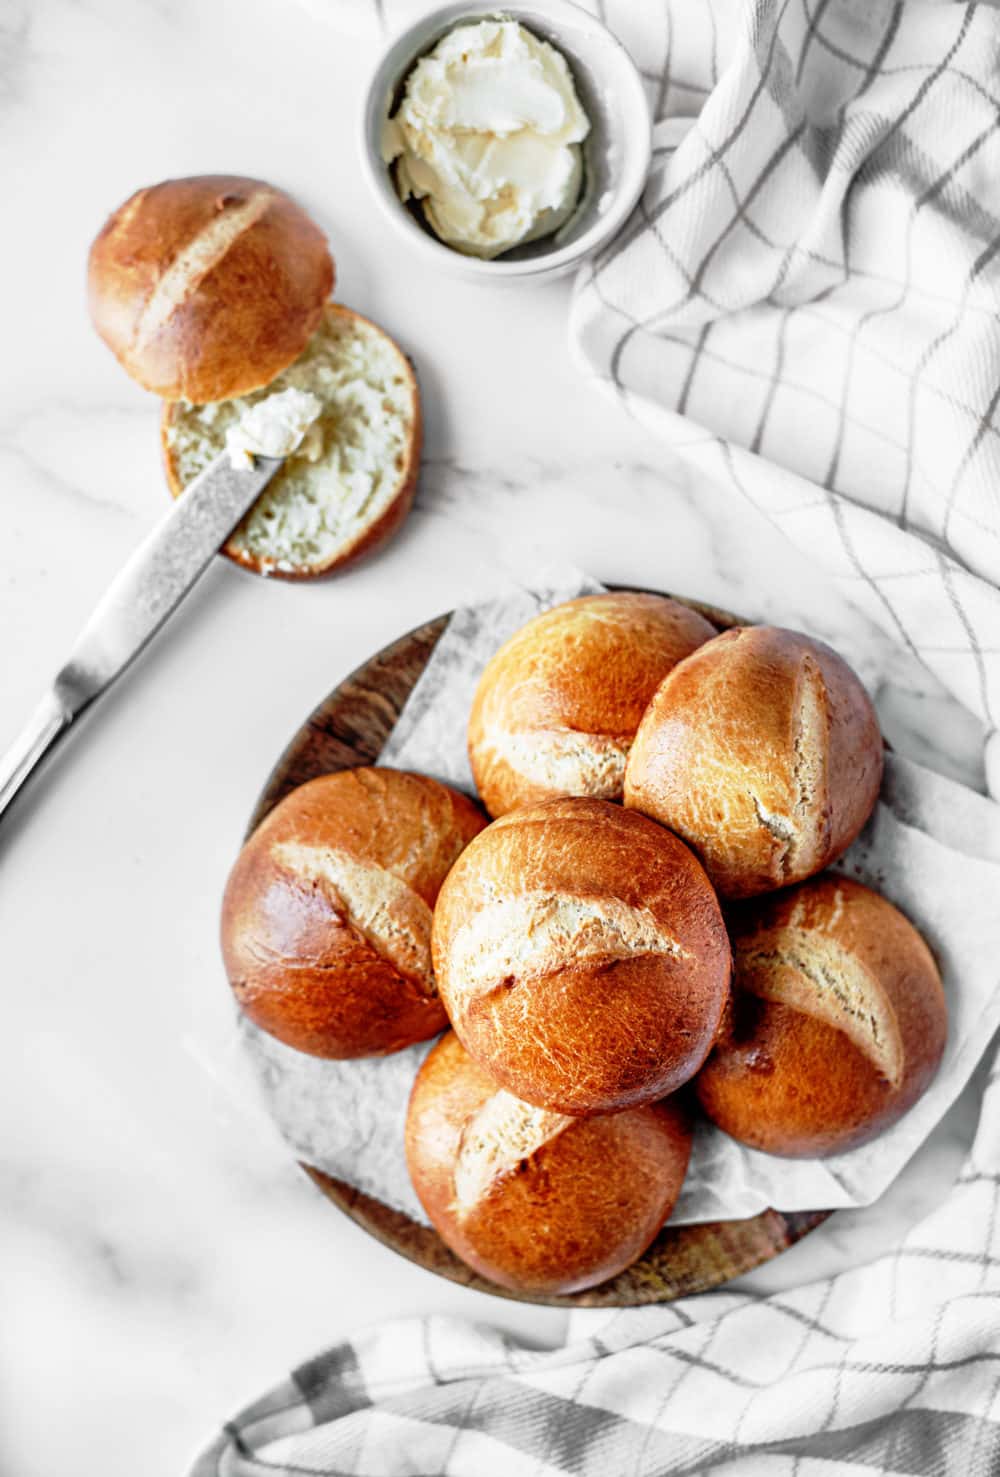 Homemade buns bread recipe